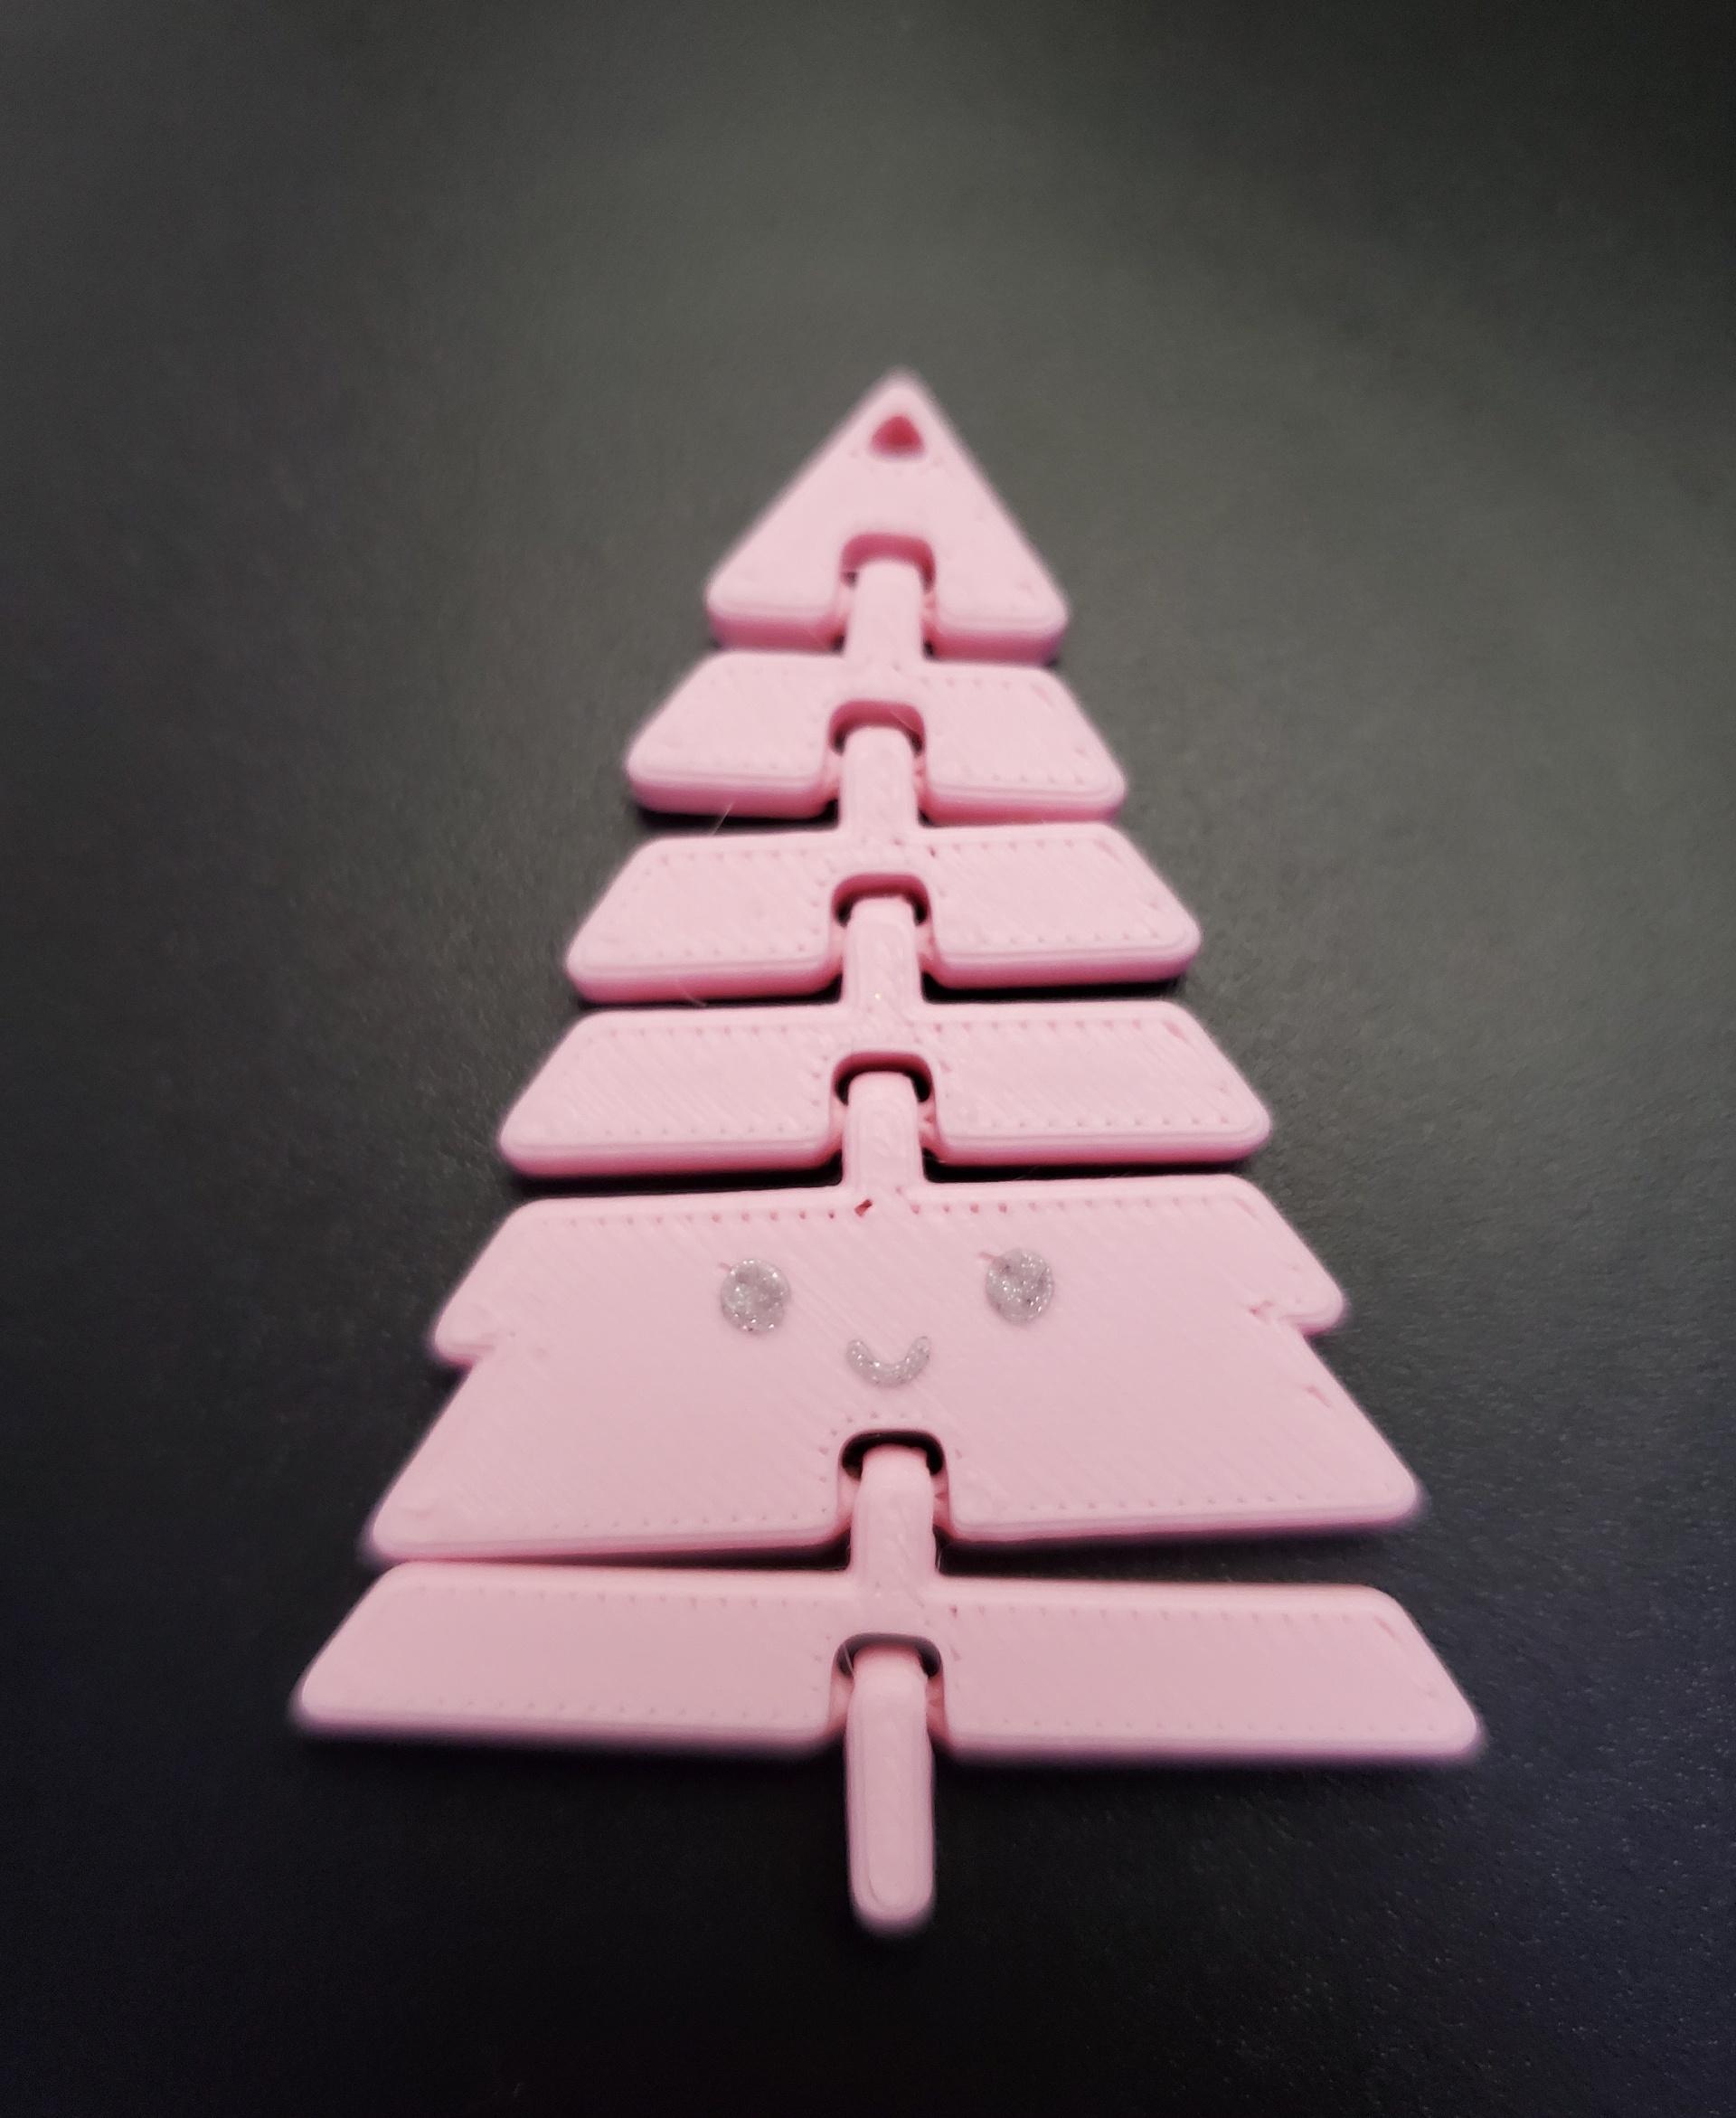 Articulated Kawaii Christmas Tree Keychain - Print in place fidget toy - 3mf - polyterra sakura pink - 3d model